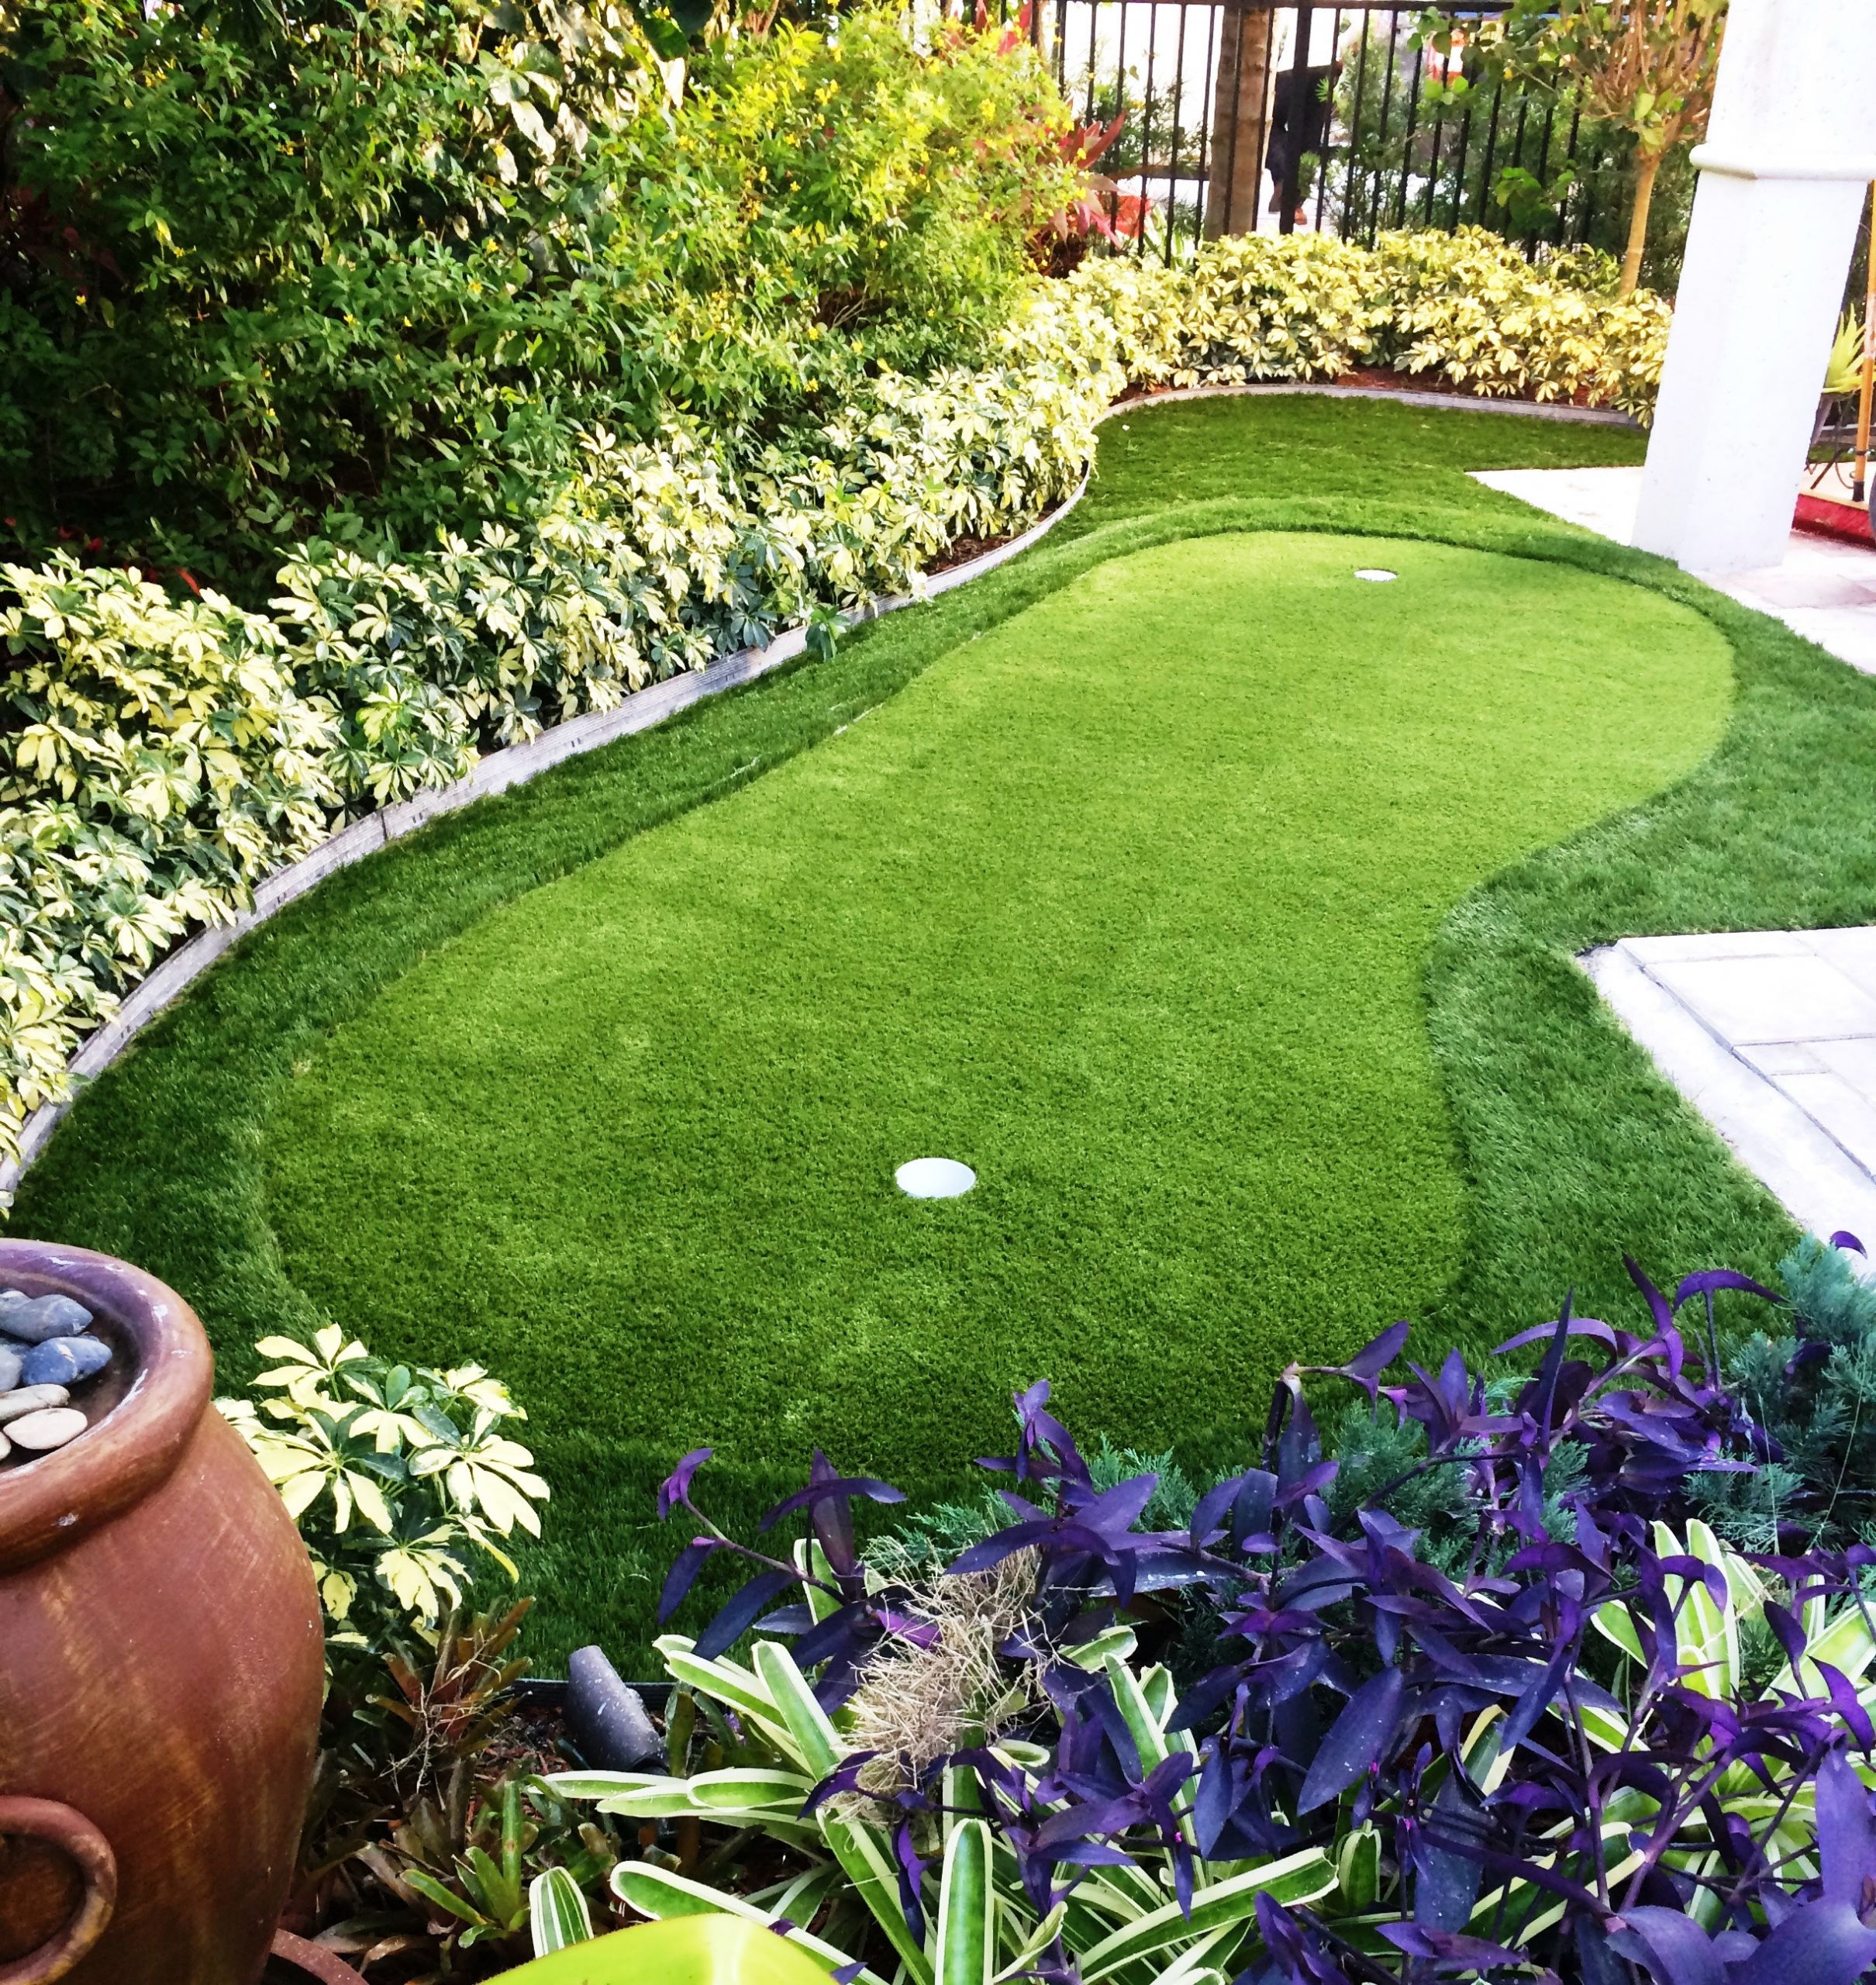 Artificial Putting Green Backyard
 Backyard Landscaping Ideas Time to Go Green Your Home